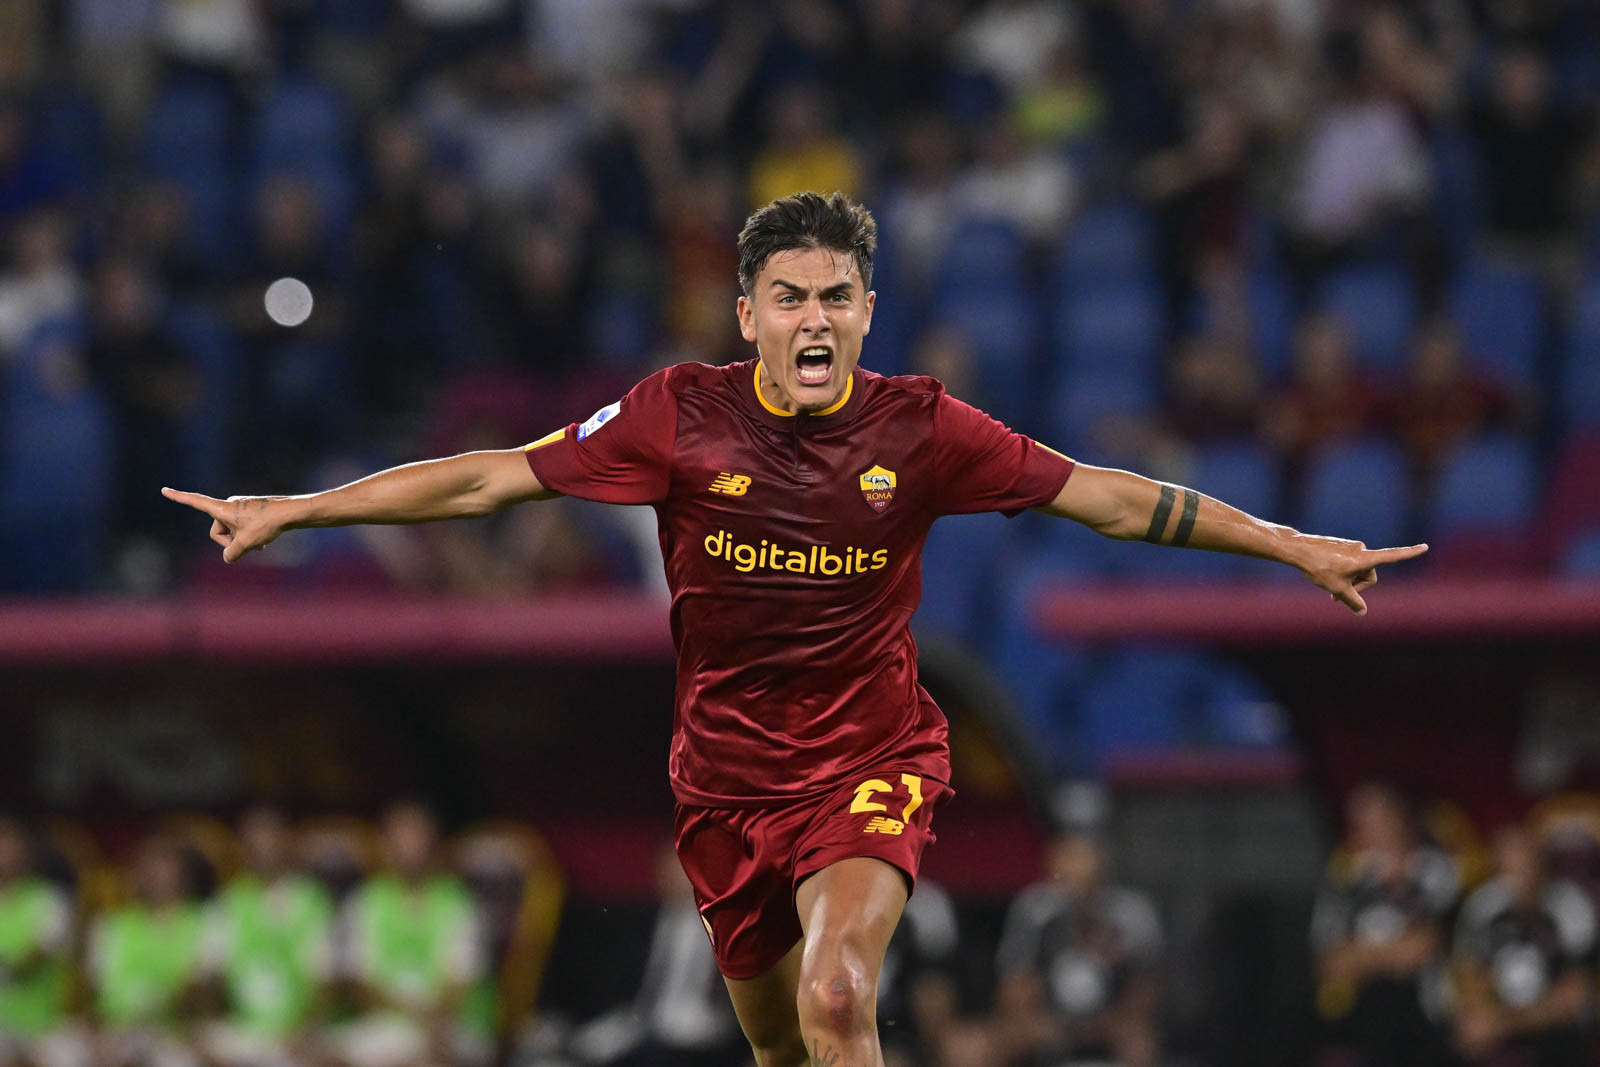 AS Roma 3-0 Monza 2022.08.30 Full Goals Highights